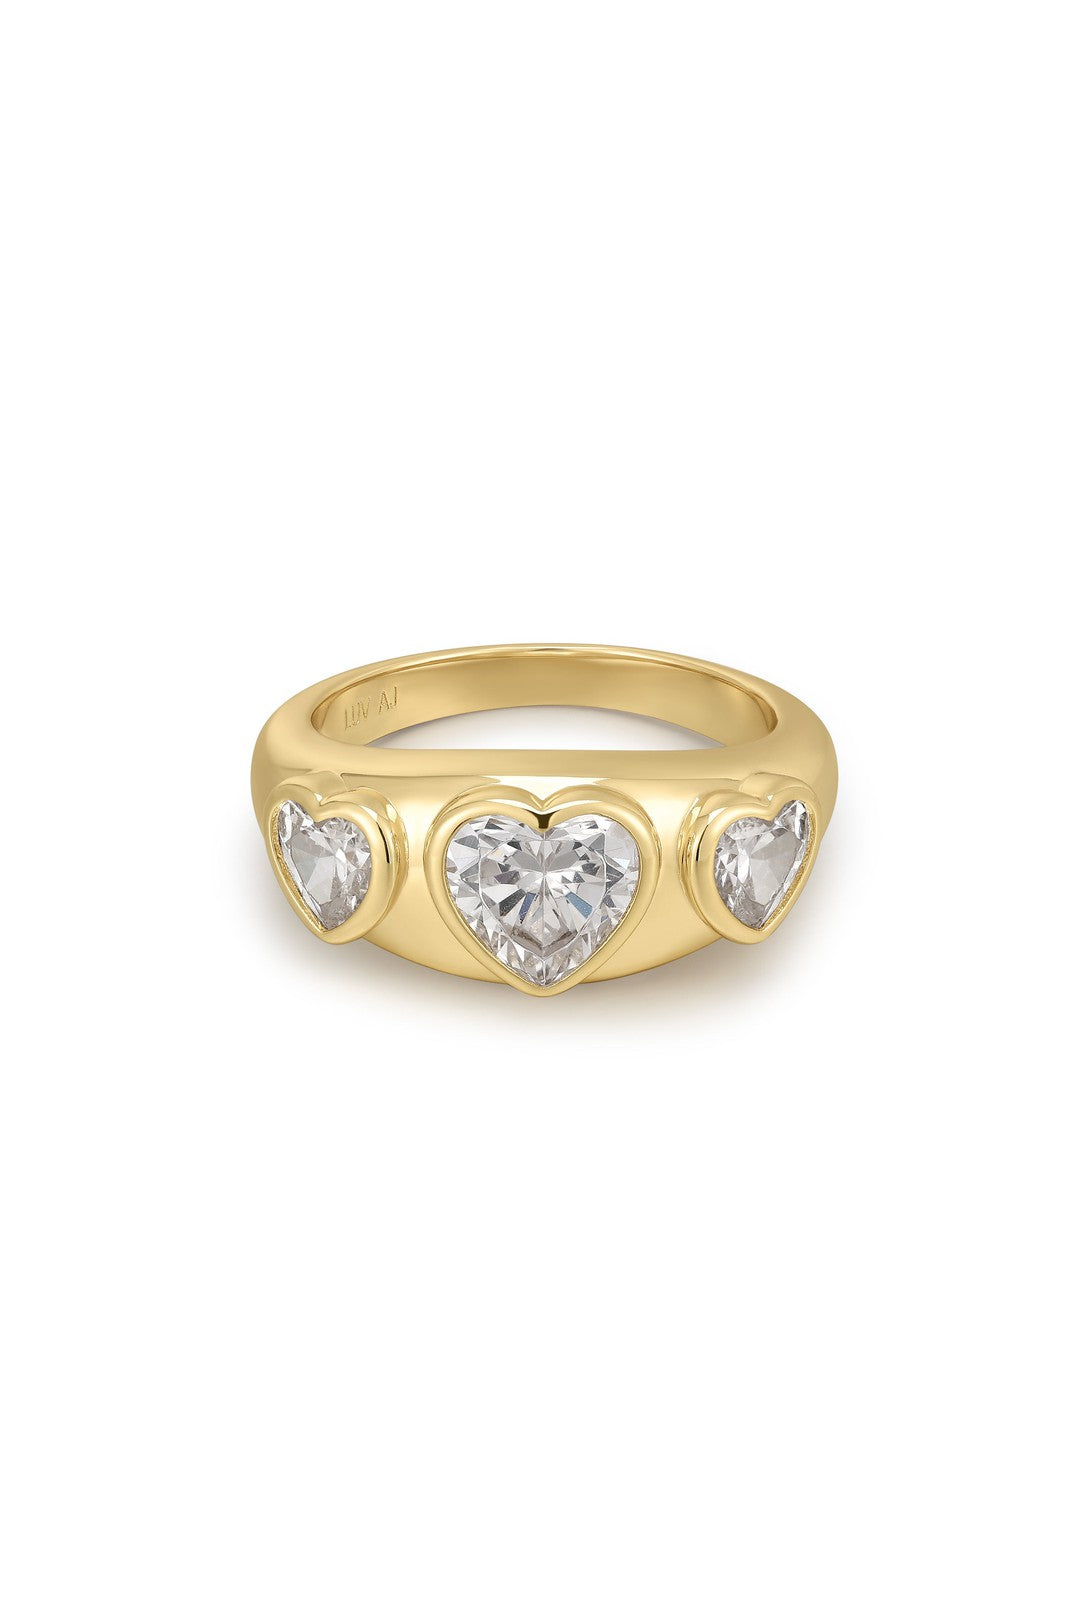 The Bezel heart signet ring, gold